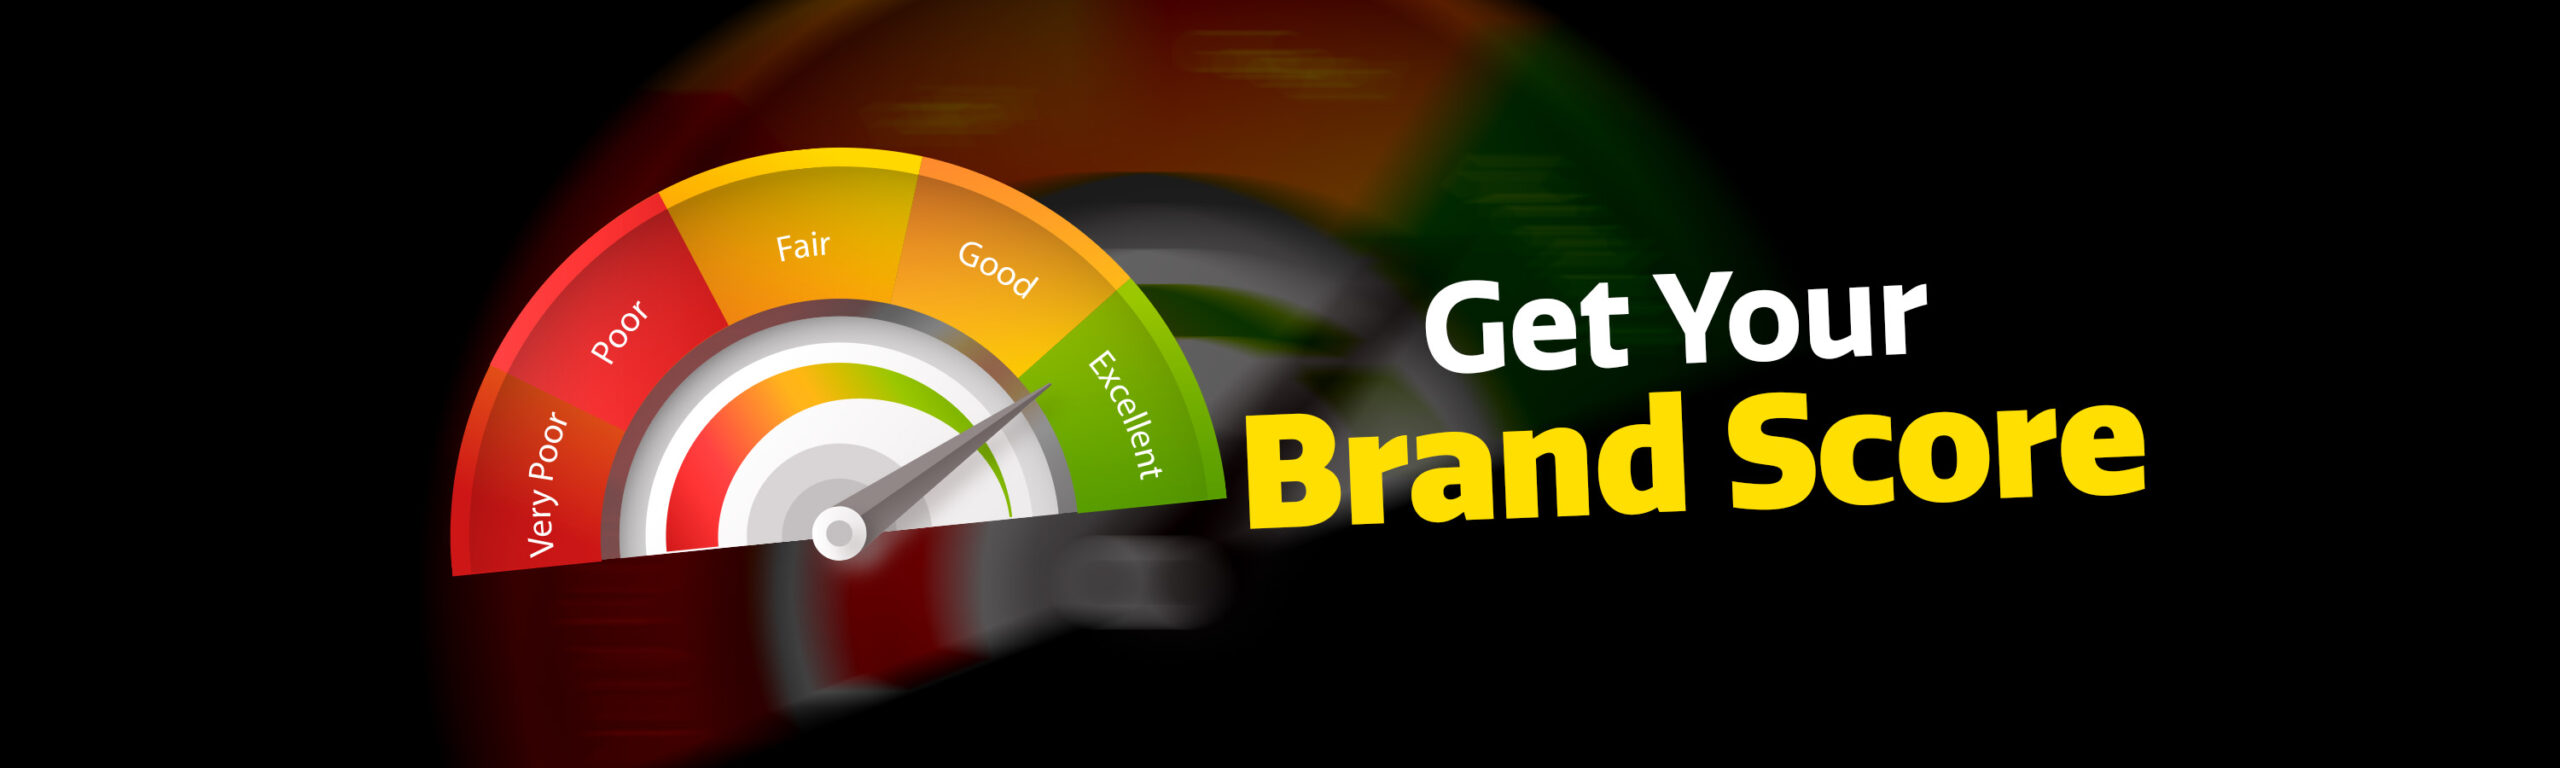 Brand Score, Bassel hallak, branding, brand building